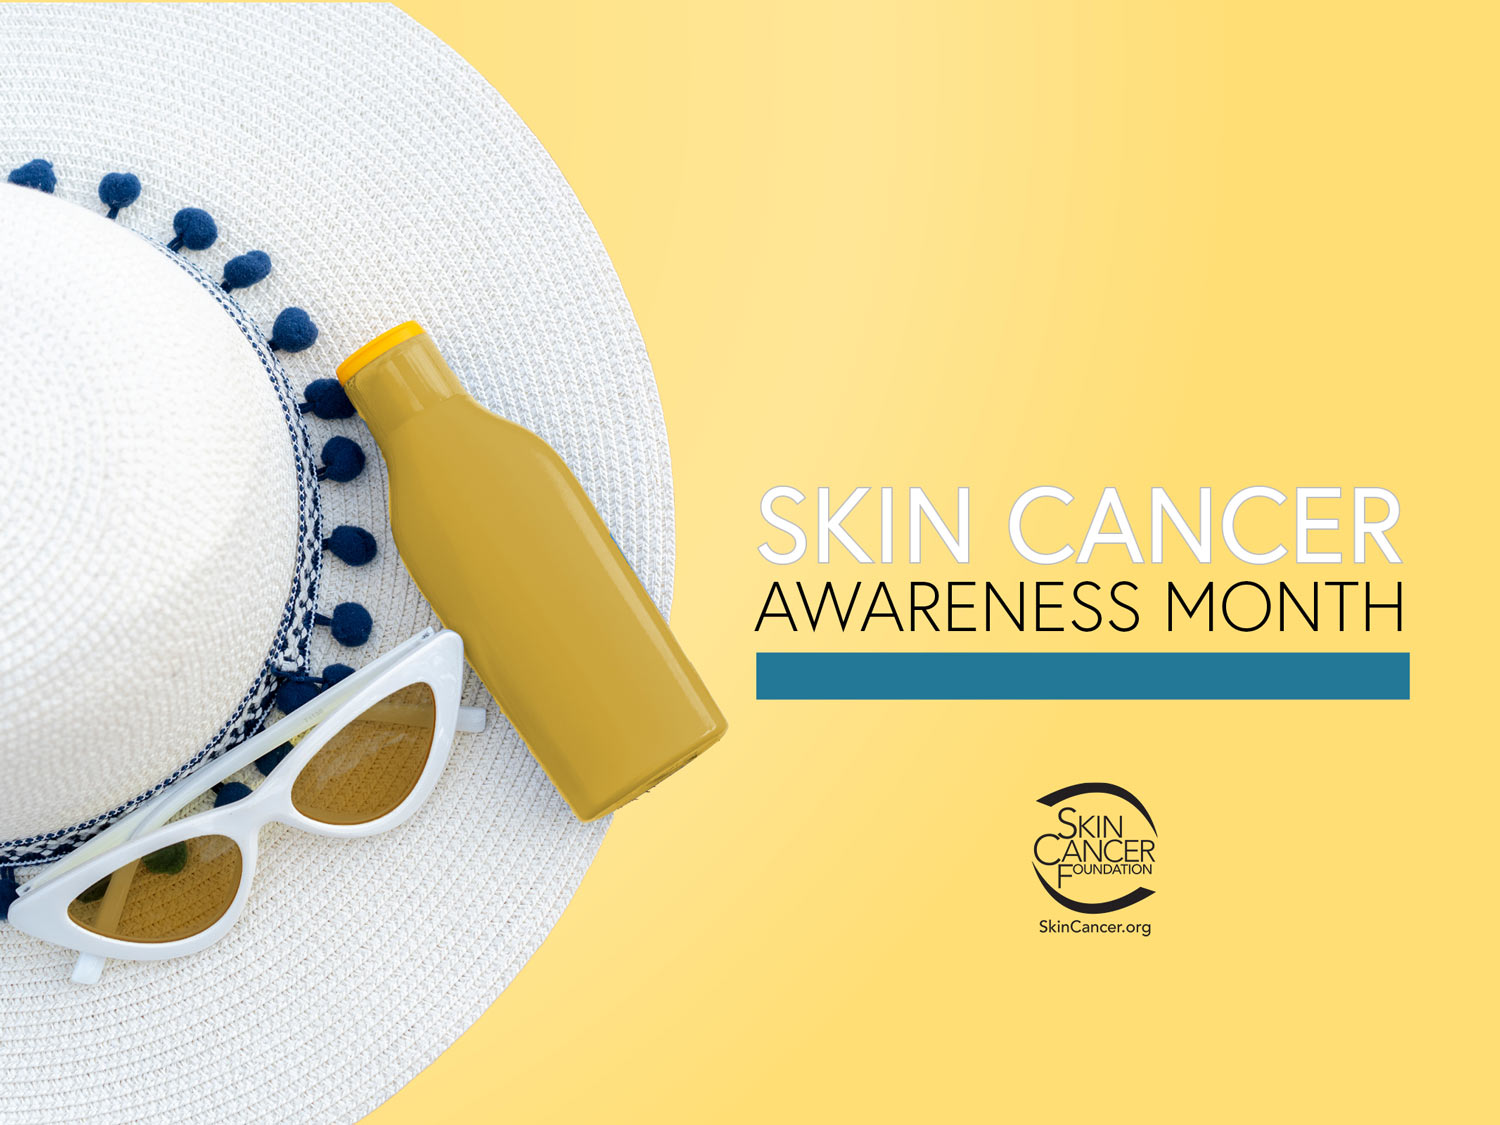 Skin Cancer Awareness Month - The Skin Cancer Foundation